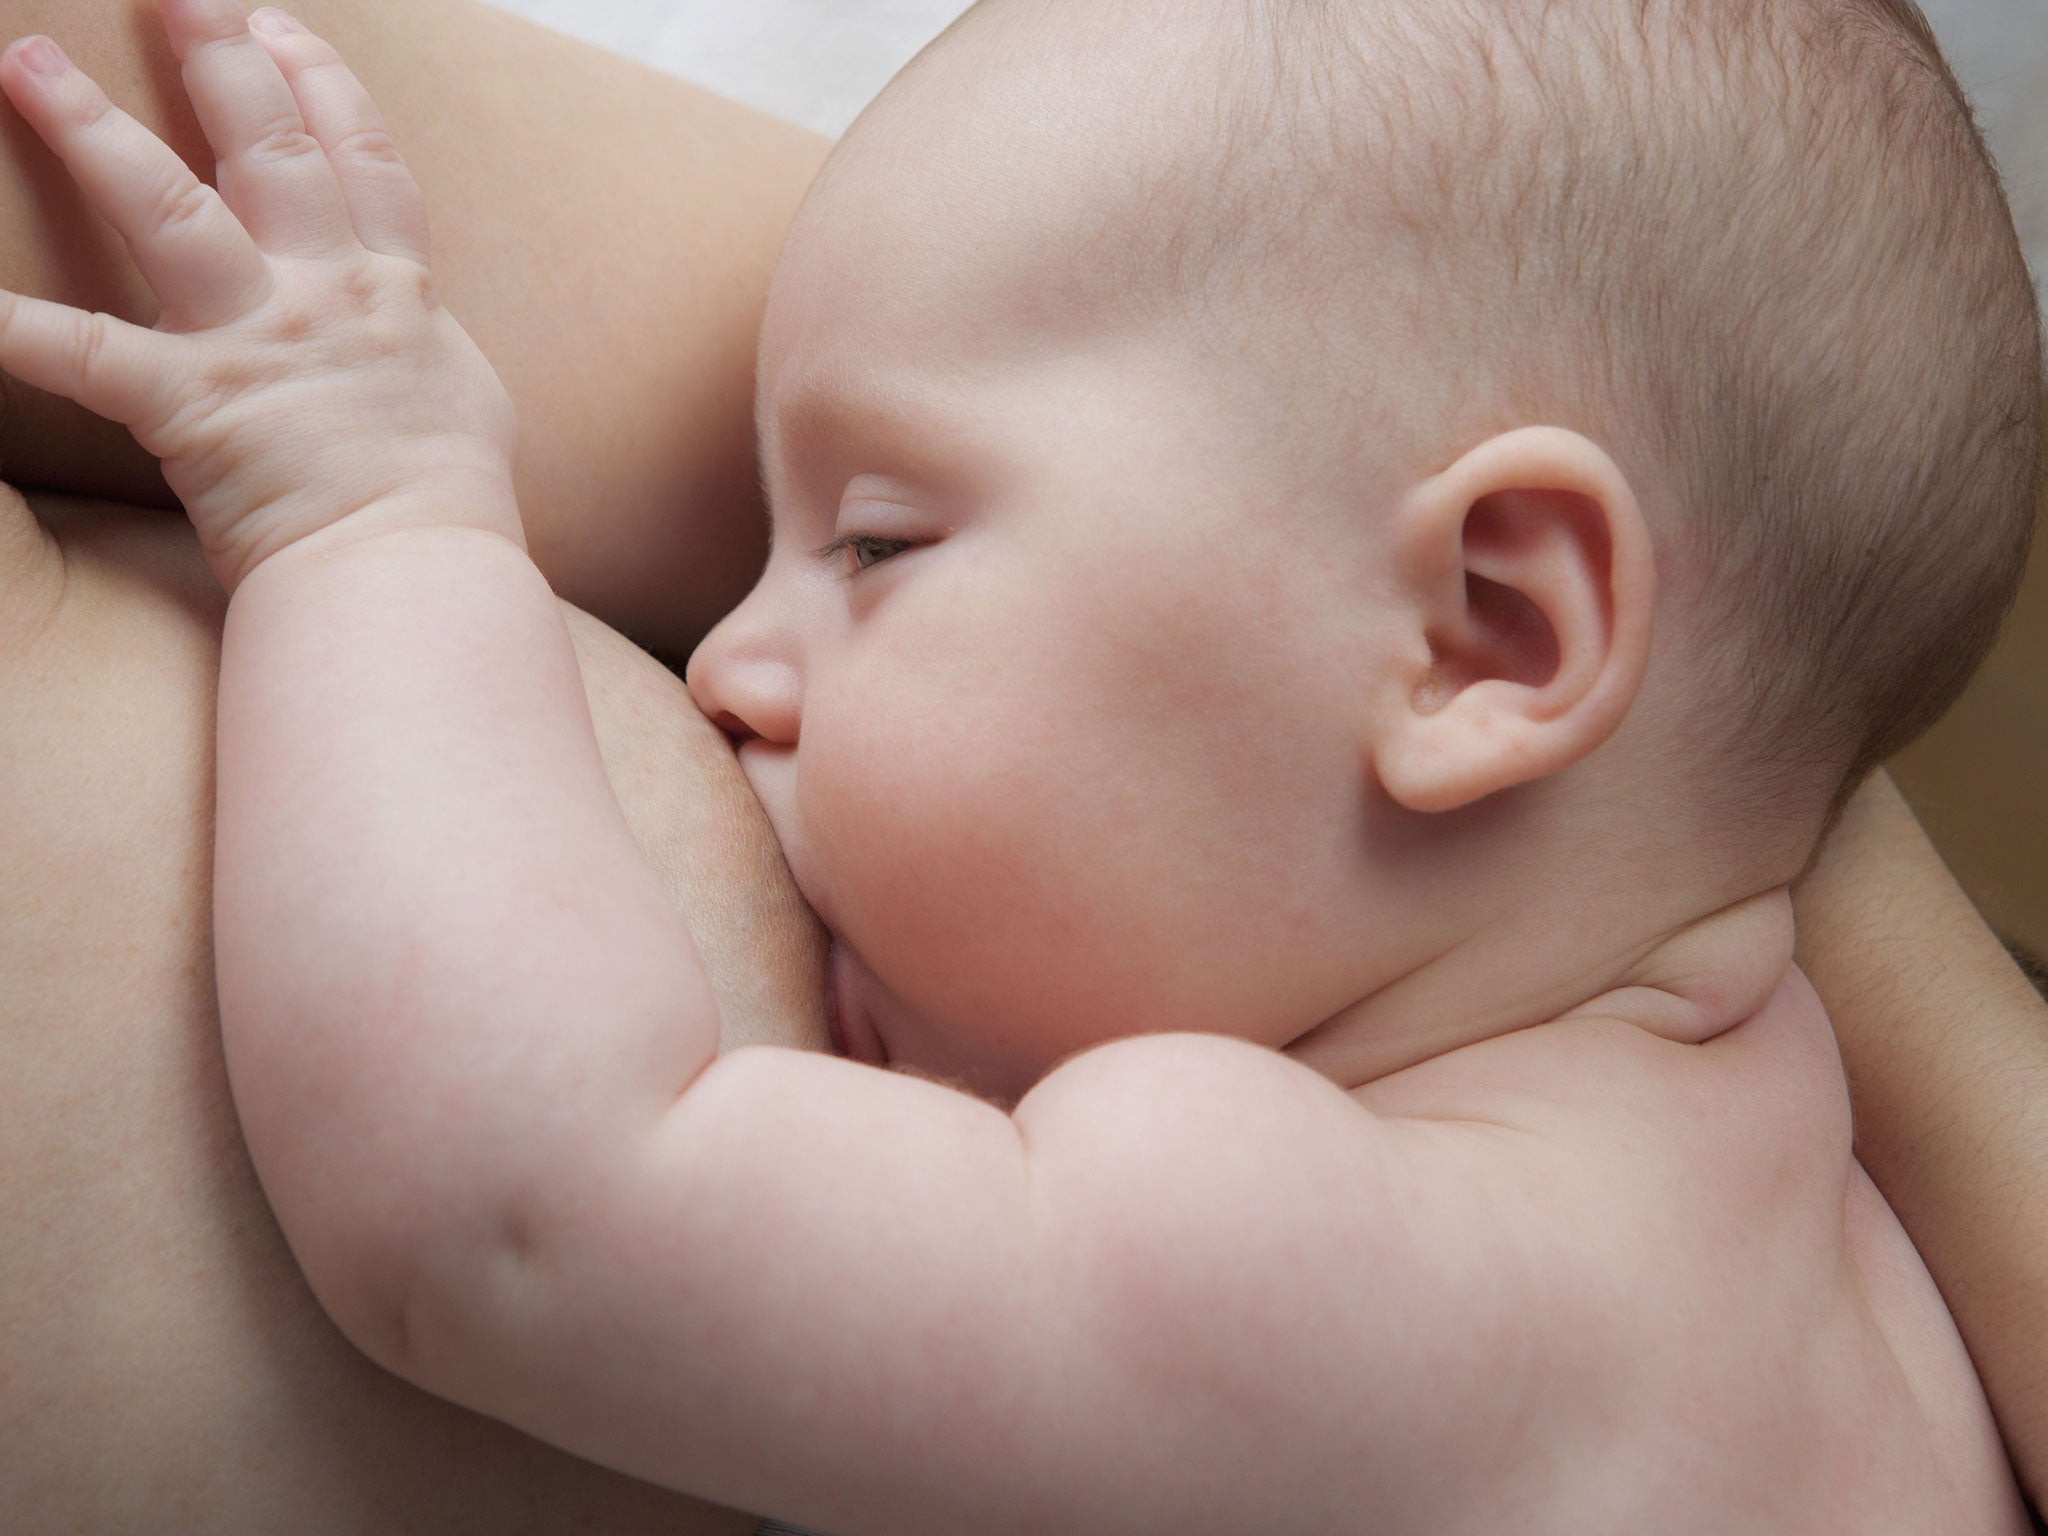 A baby girl breastfeeding